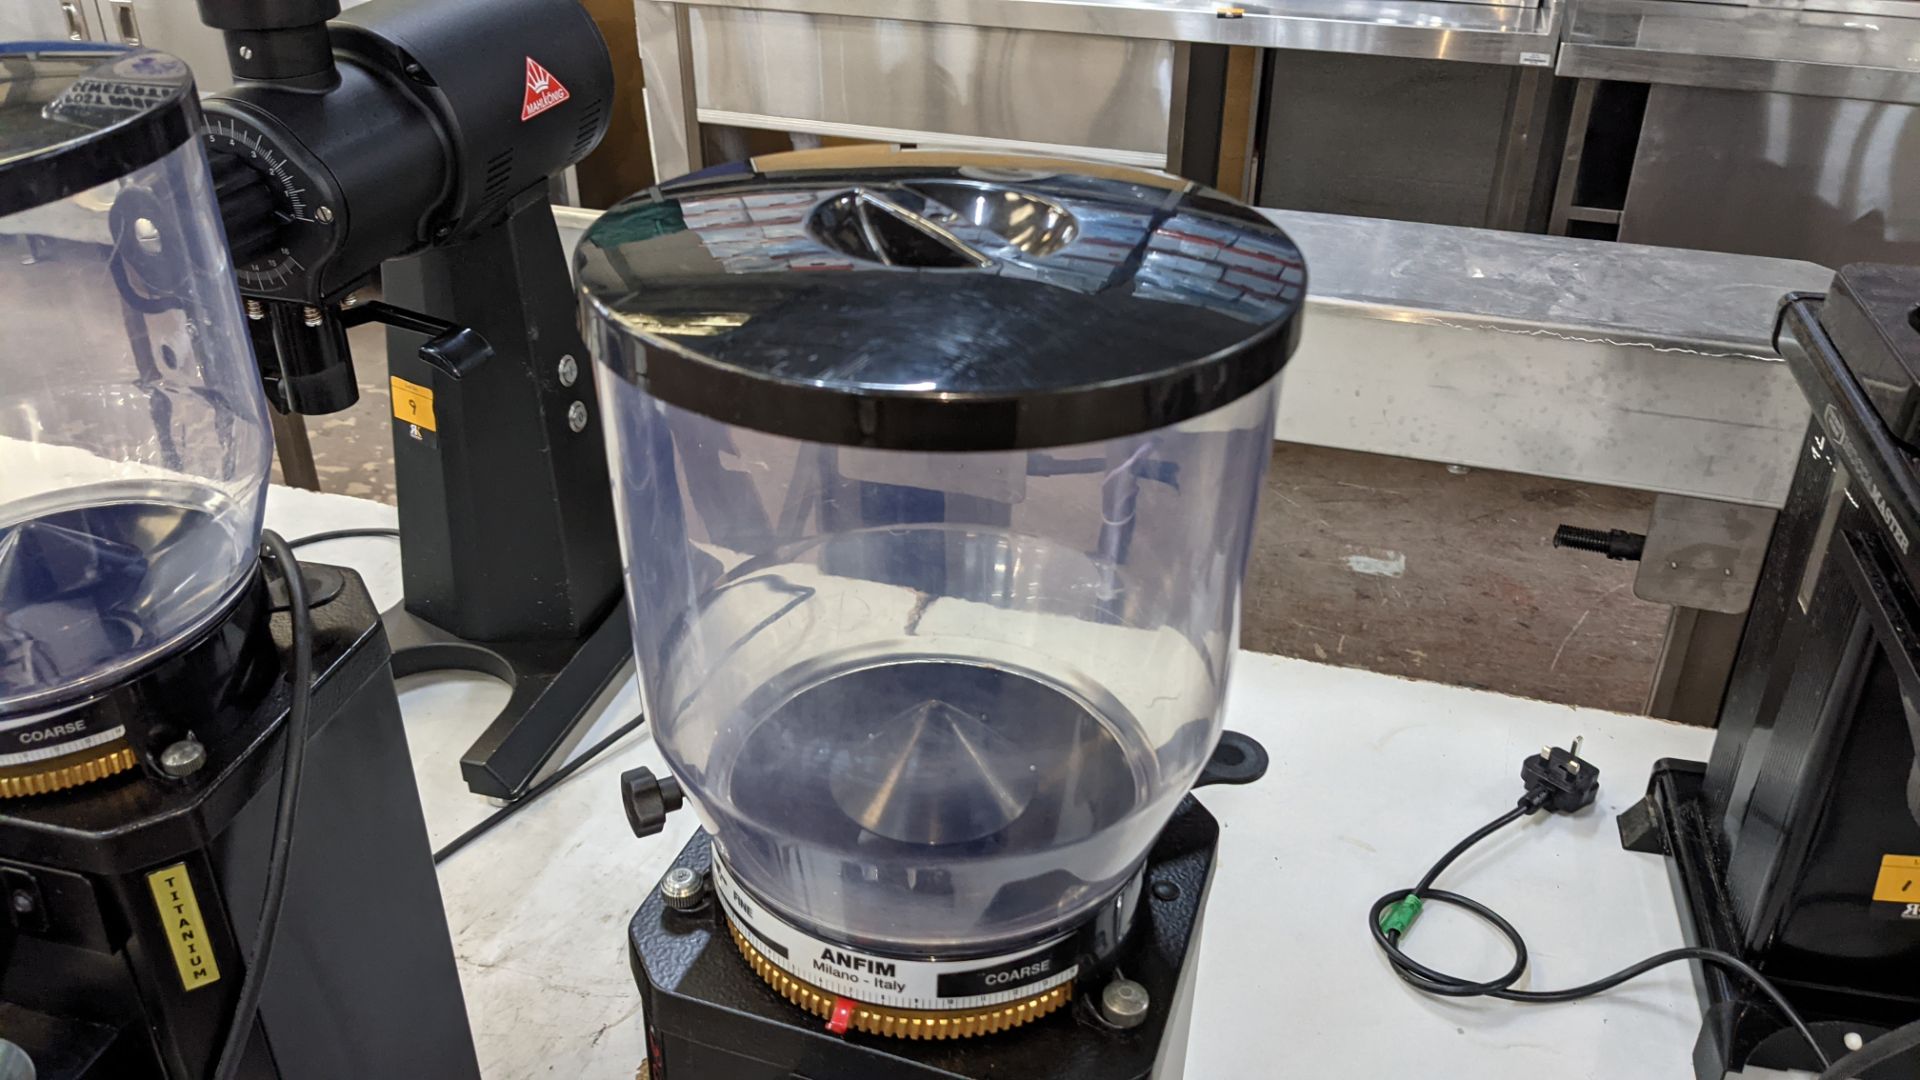 2019 Anfim model SPii titanium espresso grinder with digital display. Understood to have been purcha - Image 10 of 12